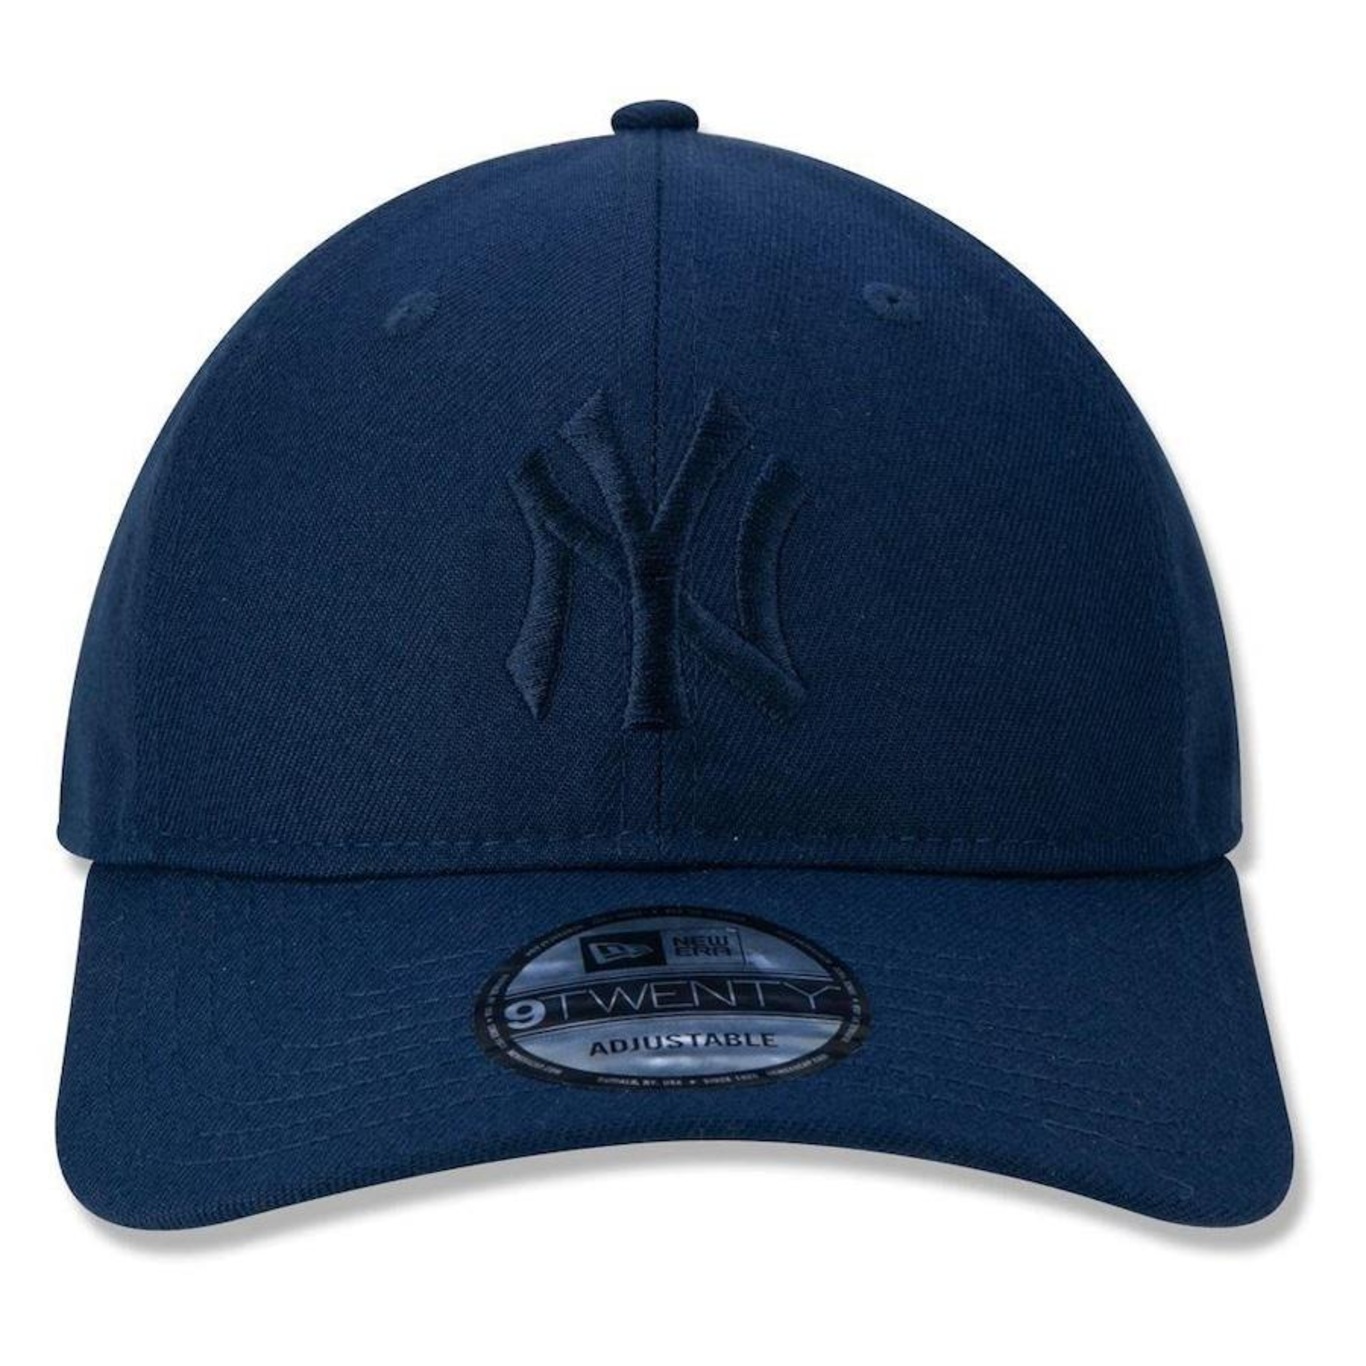 Camiseta New York Yankees 25 Team - New Era - FIRST DOWN